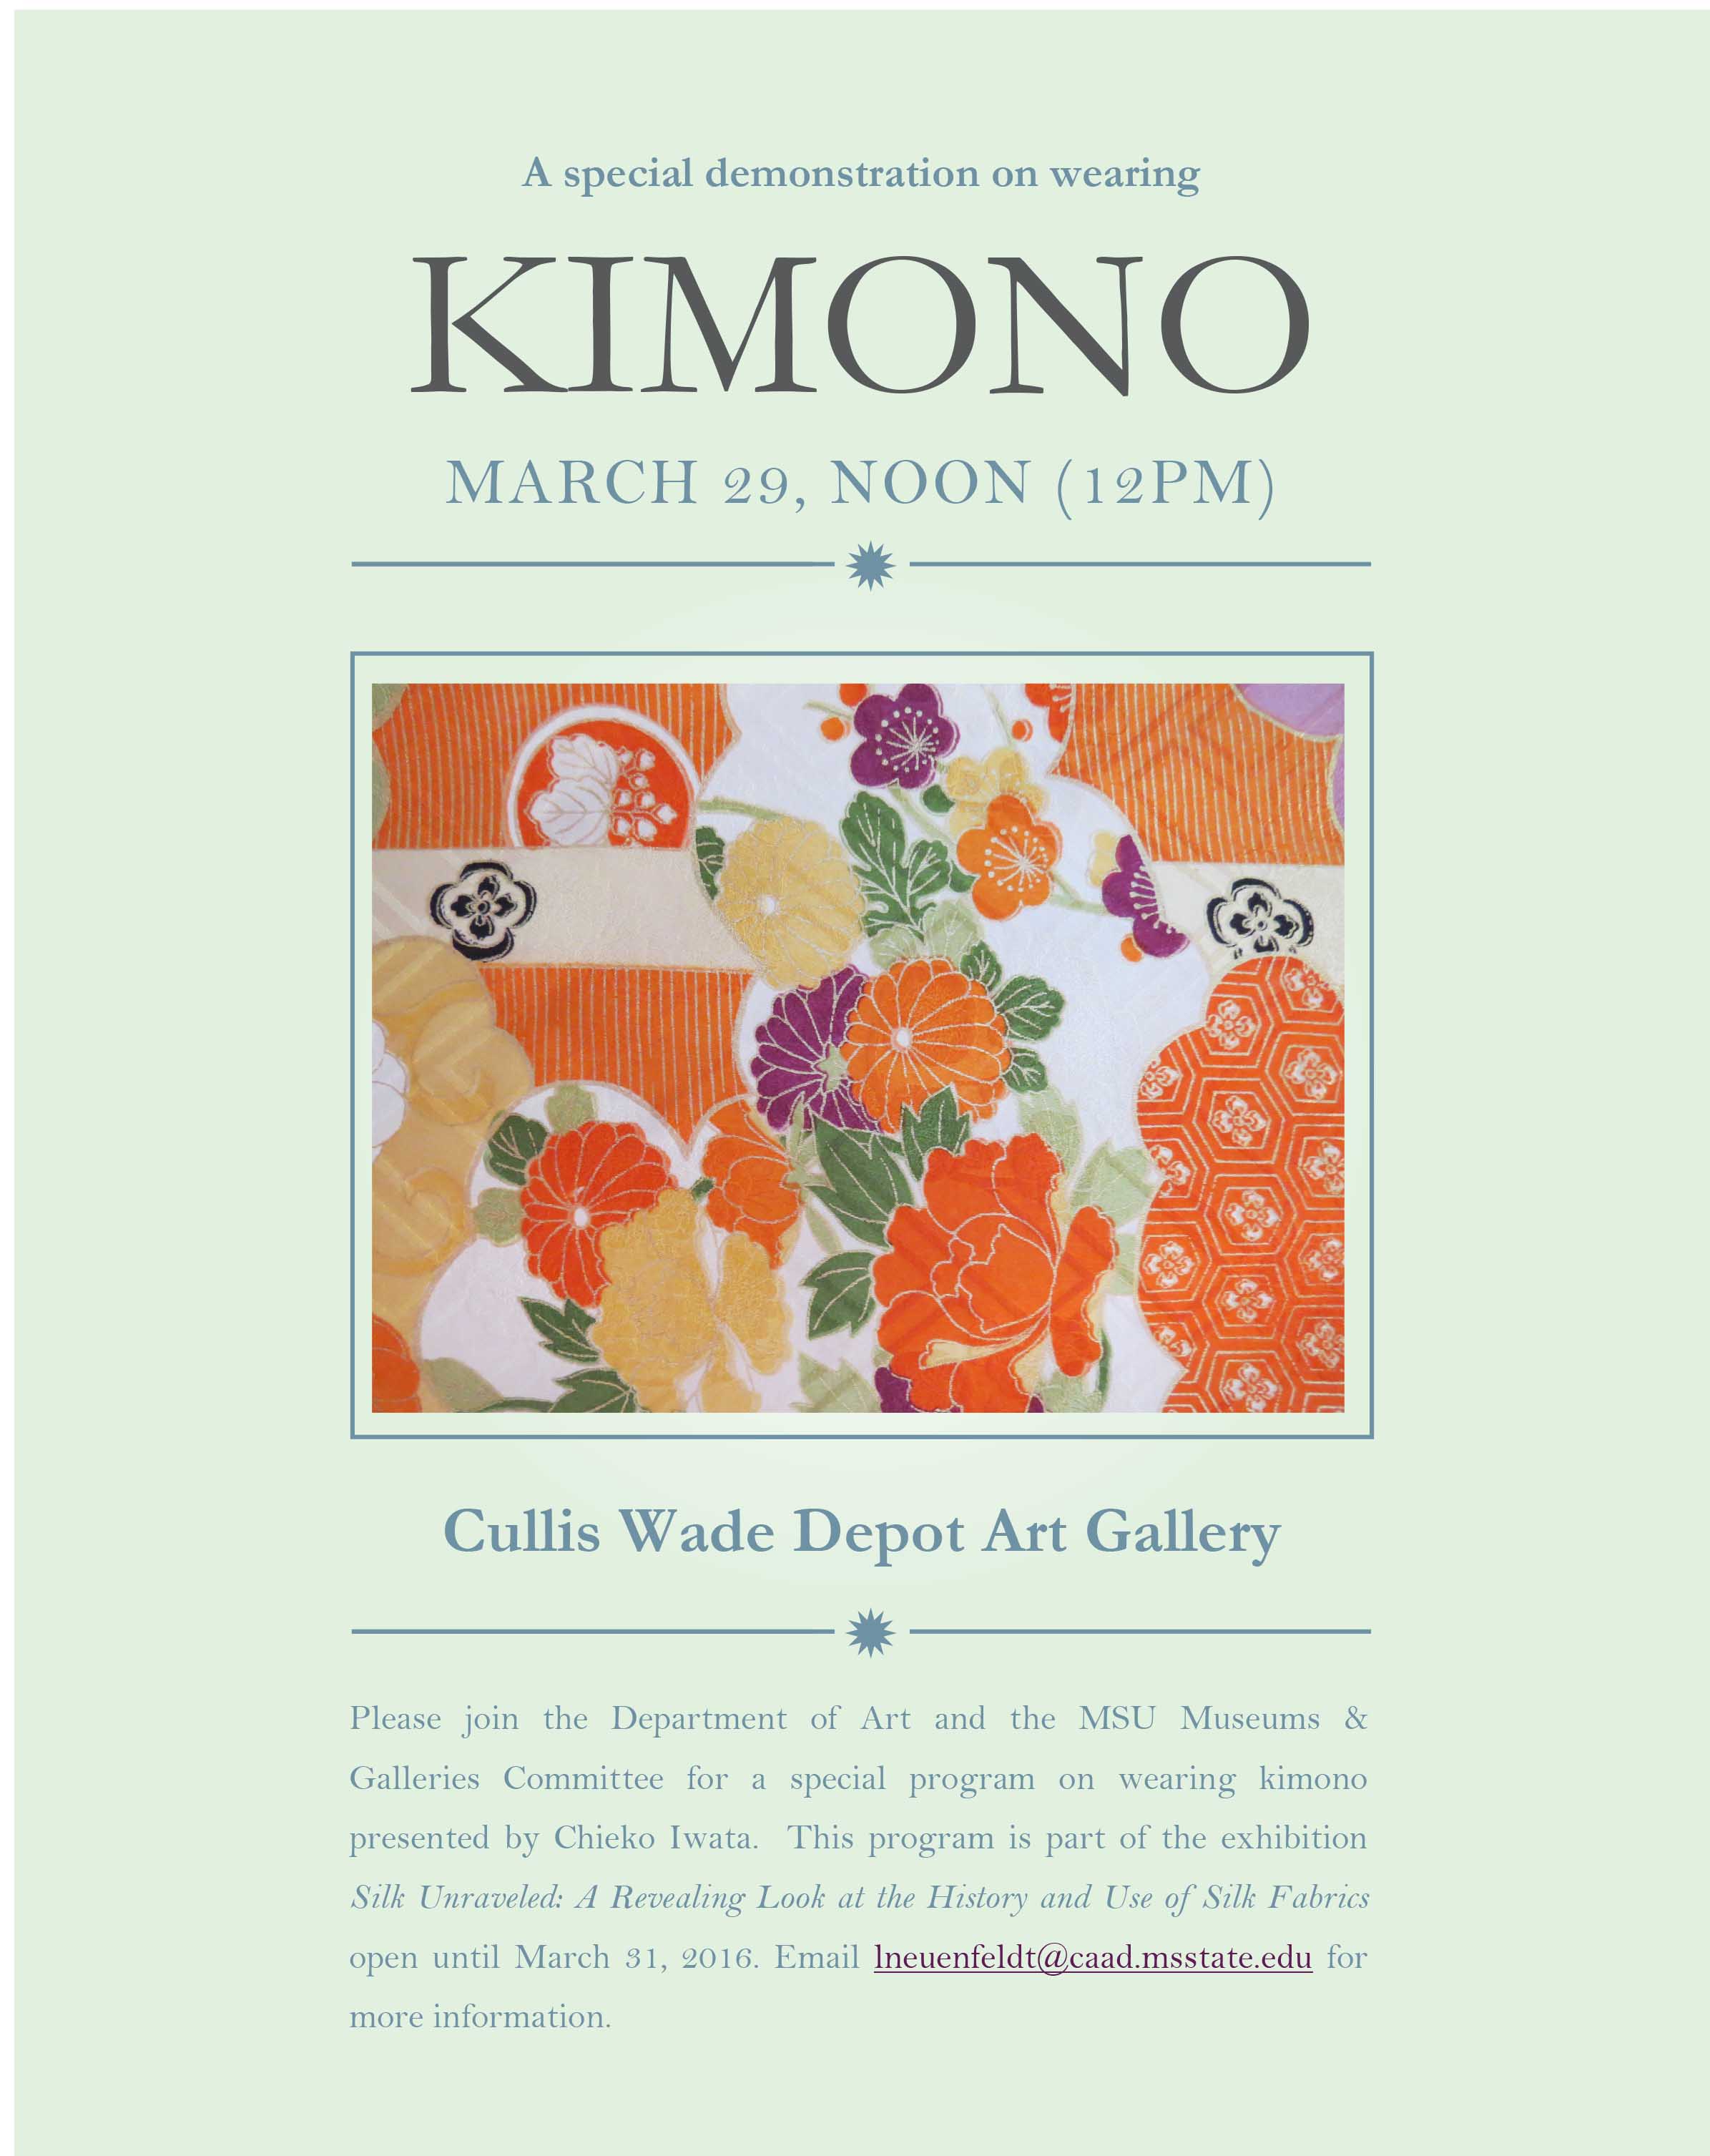 Microsoft Word - Kimono Demonstration March 29.docx